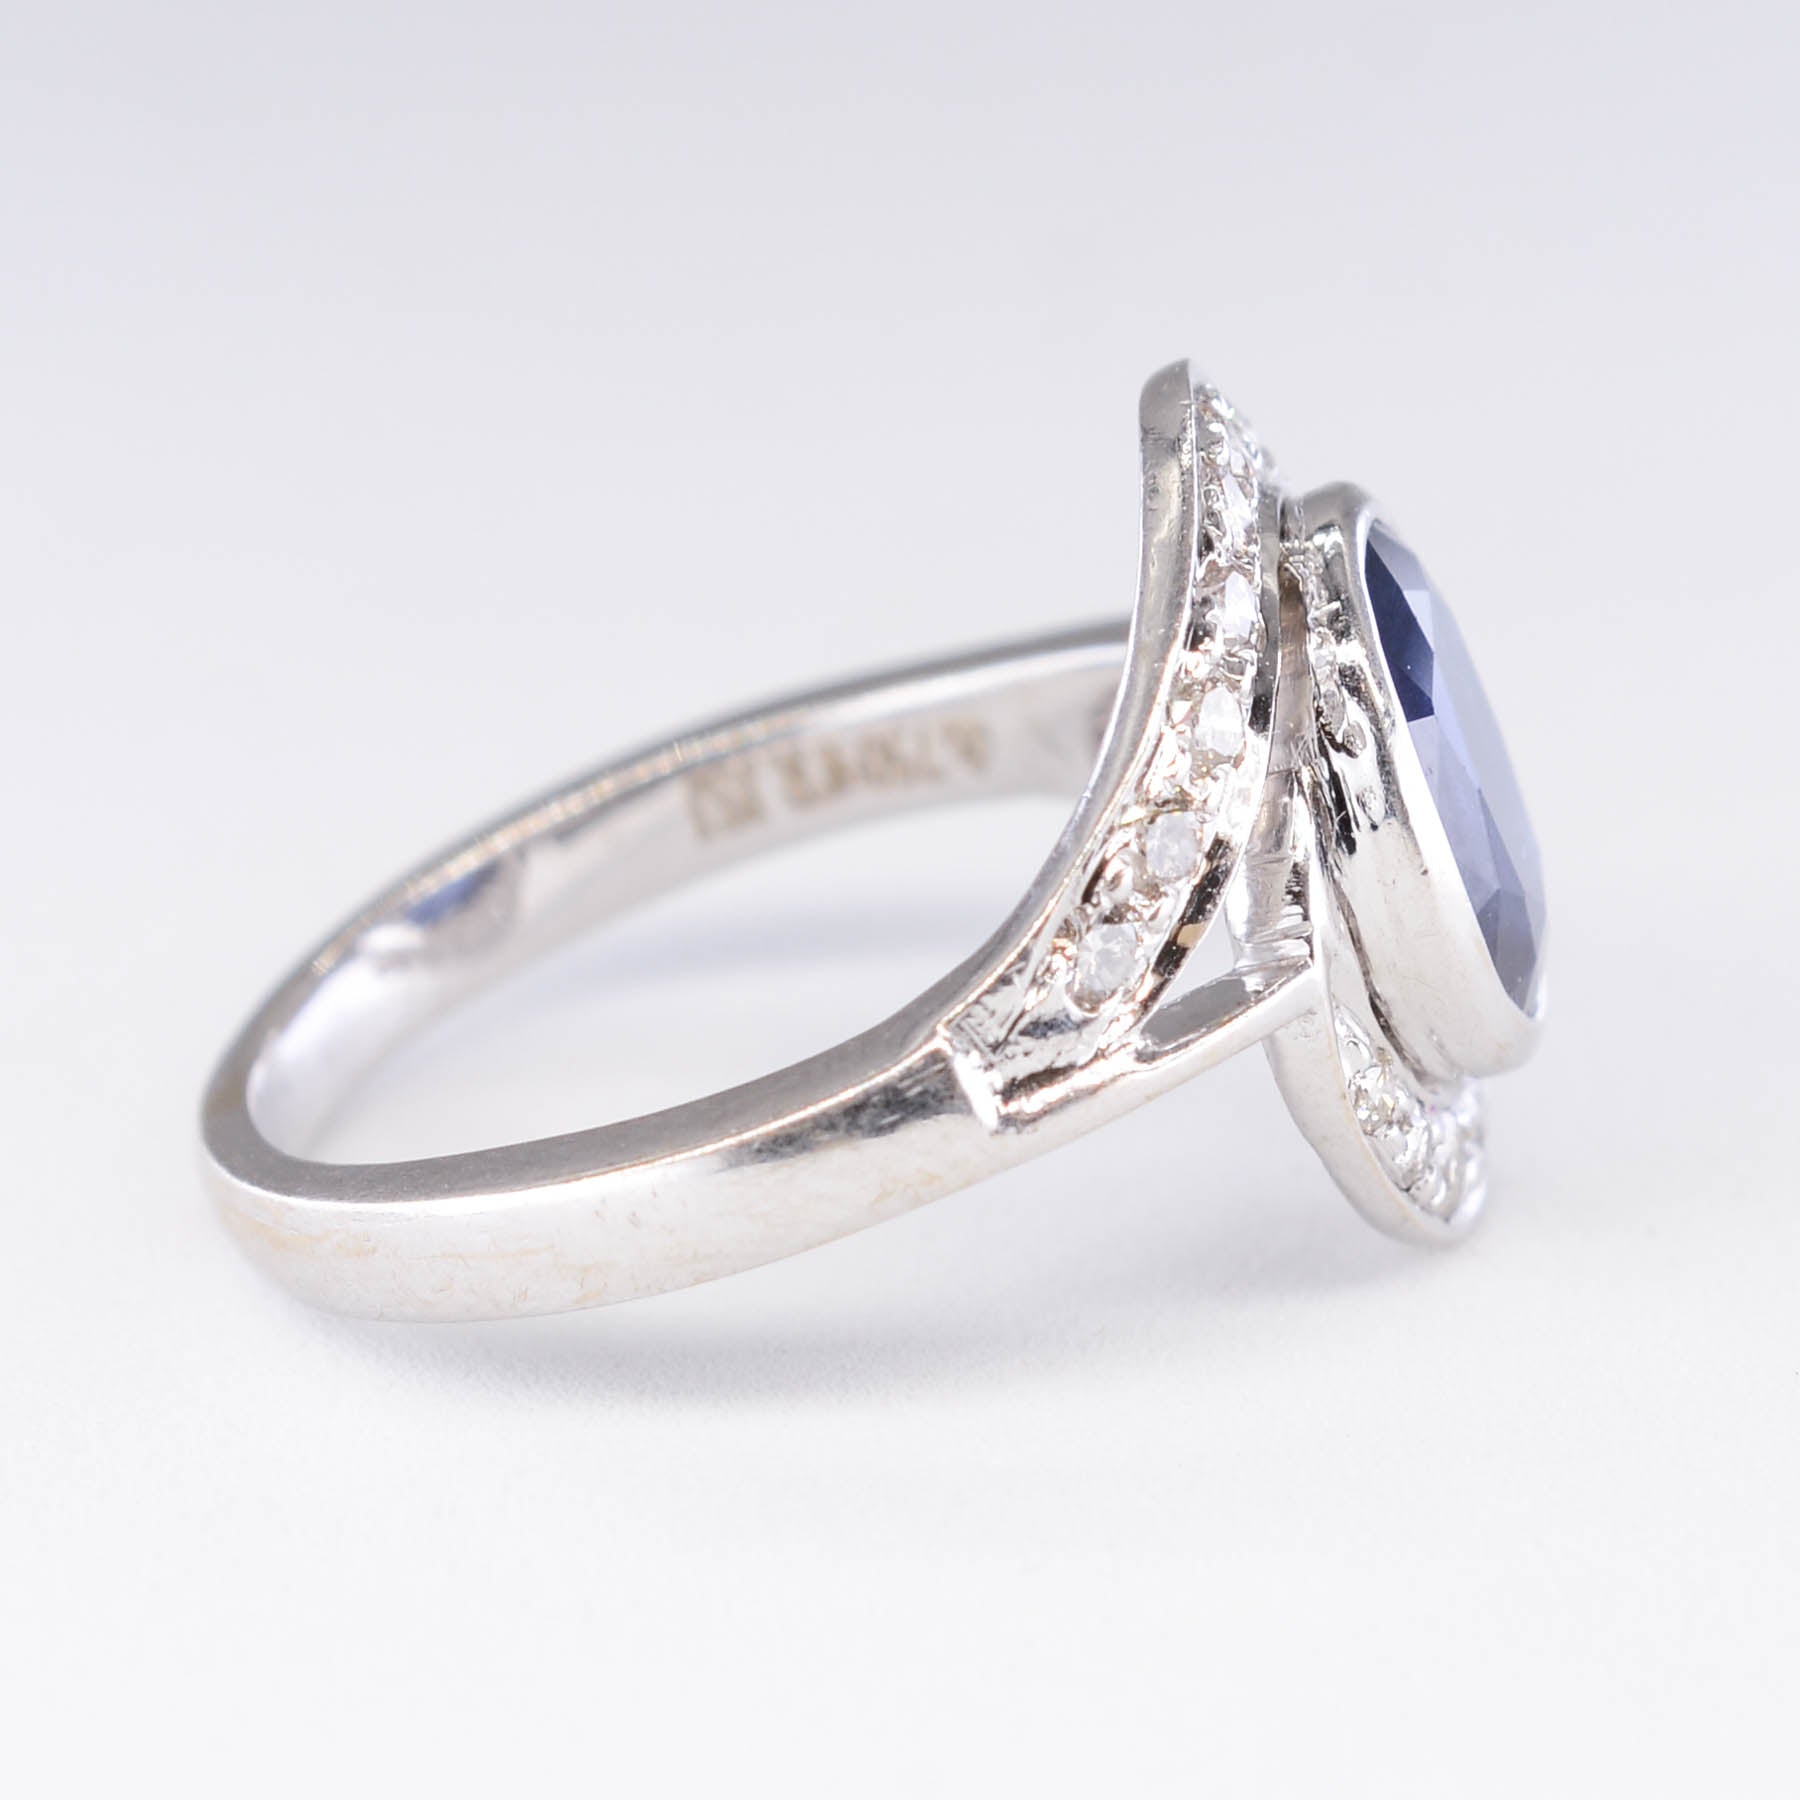 T.K. Anderson's Sapphire and Diamond Bypass Ring | 1.60 ct Sapphire, 0.38ctw DIamonds SZ 7 |